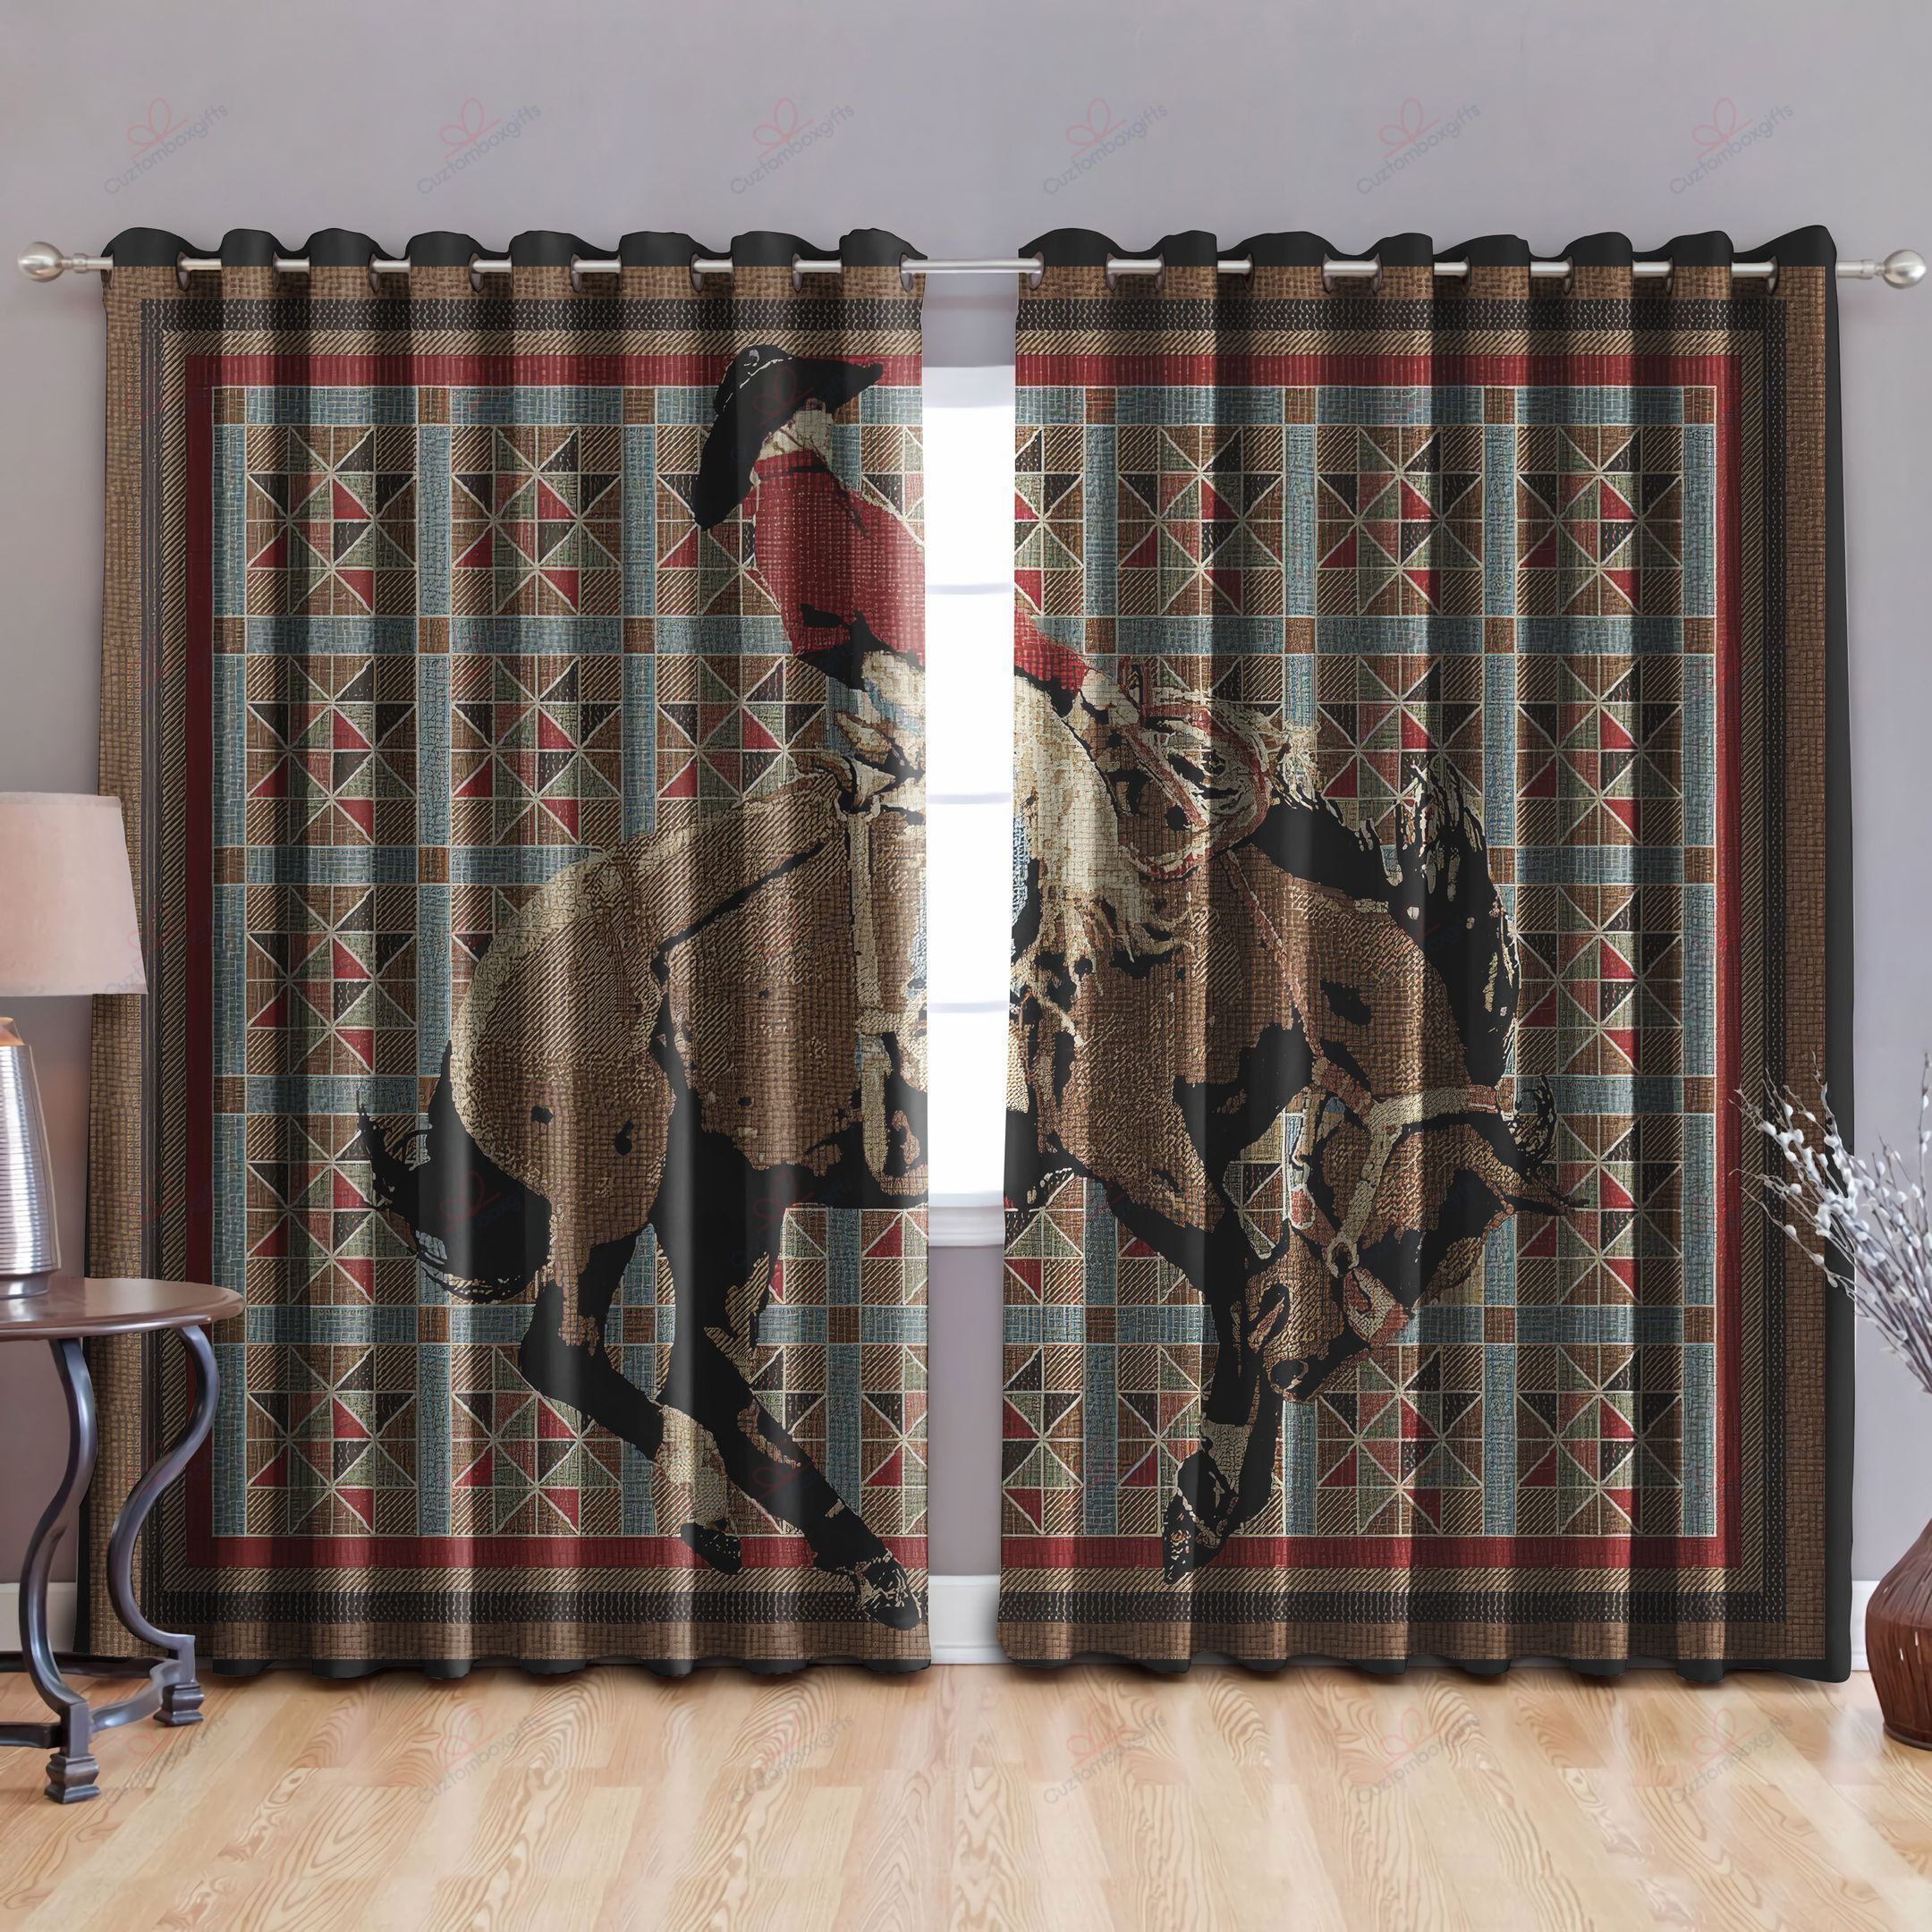 Cowboy Riding Horse Printed Window Curtain Home Decor